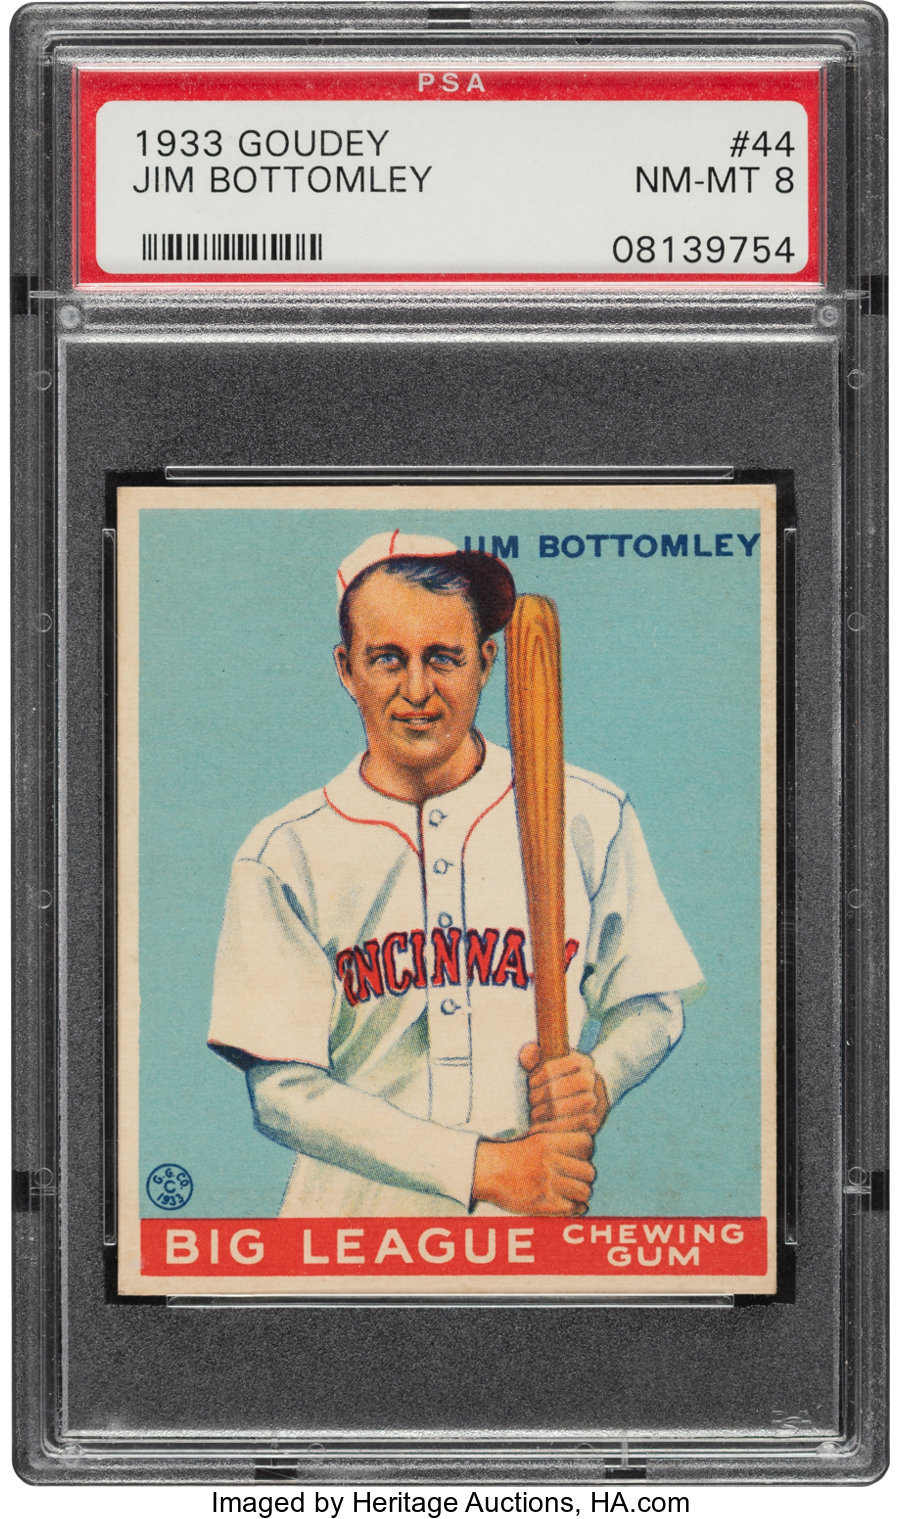 1933 Goudey Jim Bottomley #44 PSA NM-MT 8 - None Higher